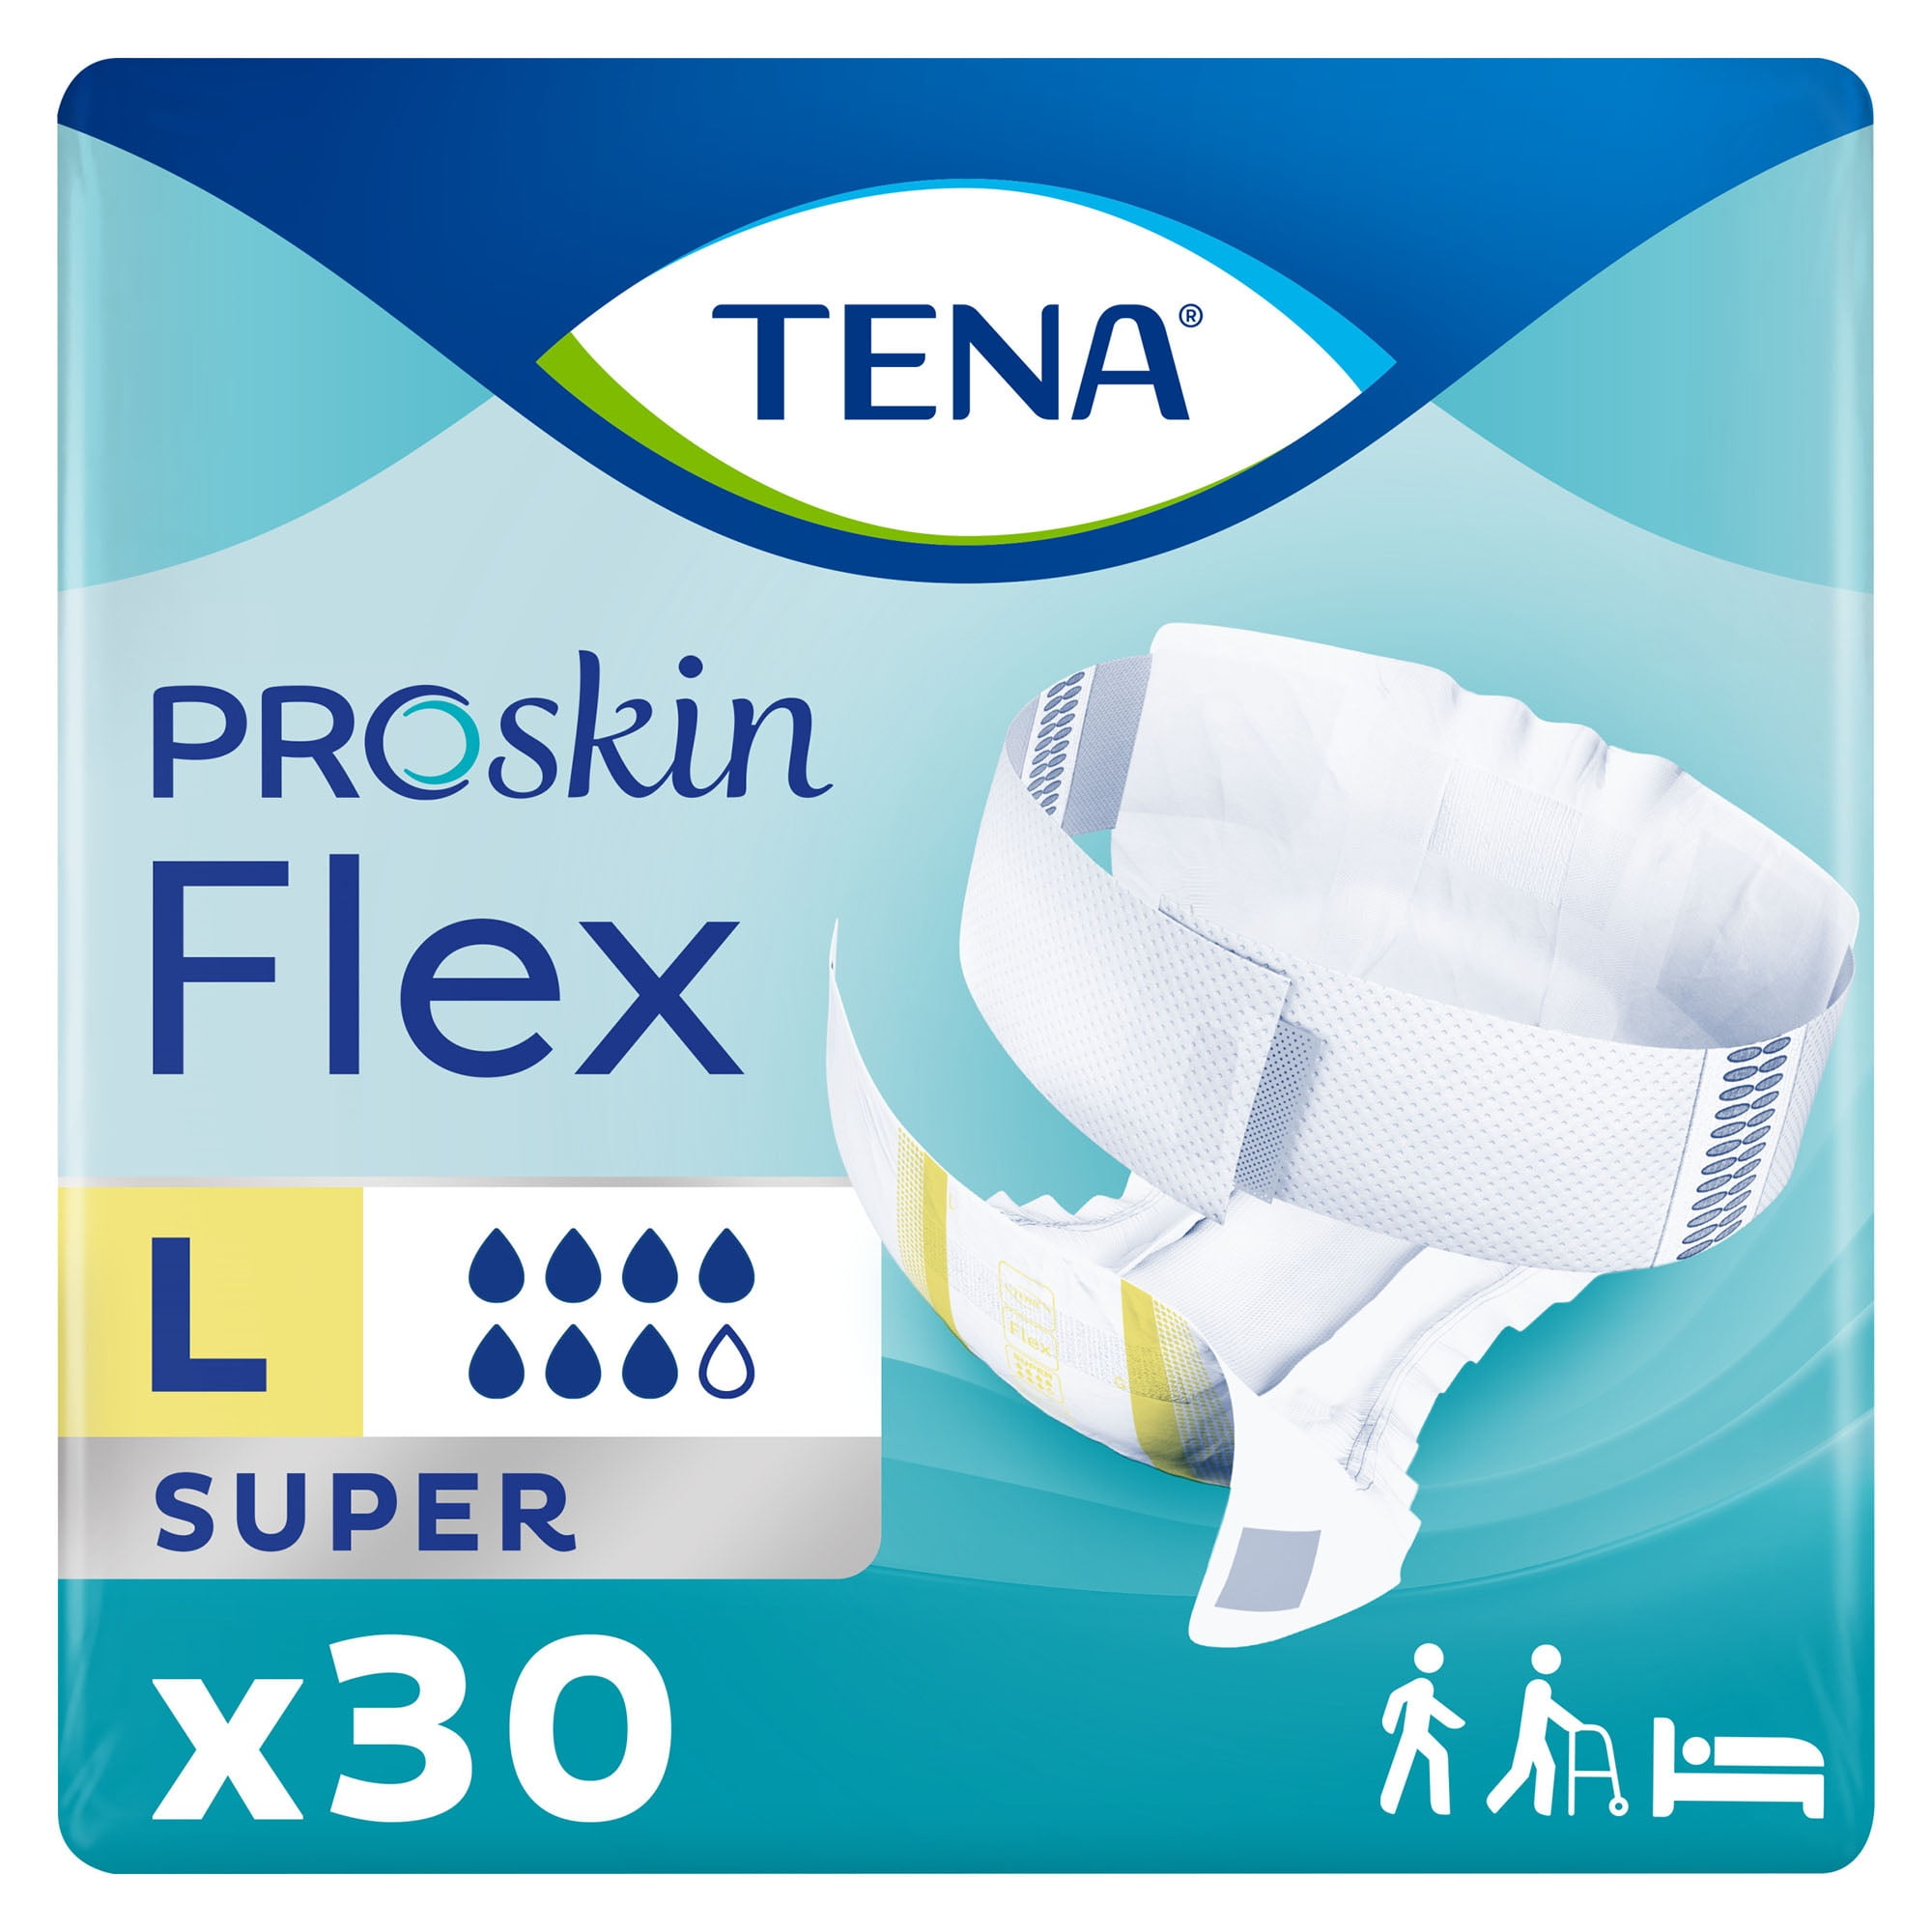 TENA ProSkin Flex Super Adult Incontinence Belted Undergarment 16